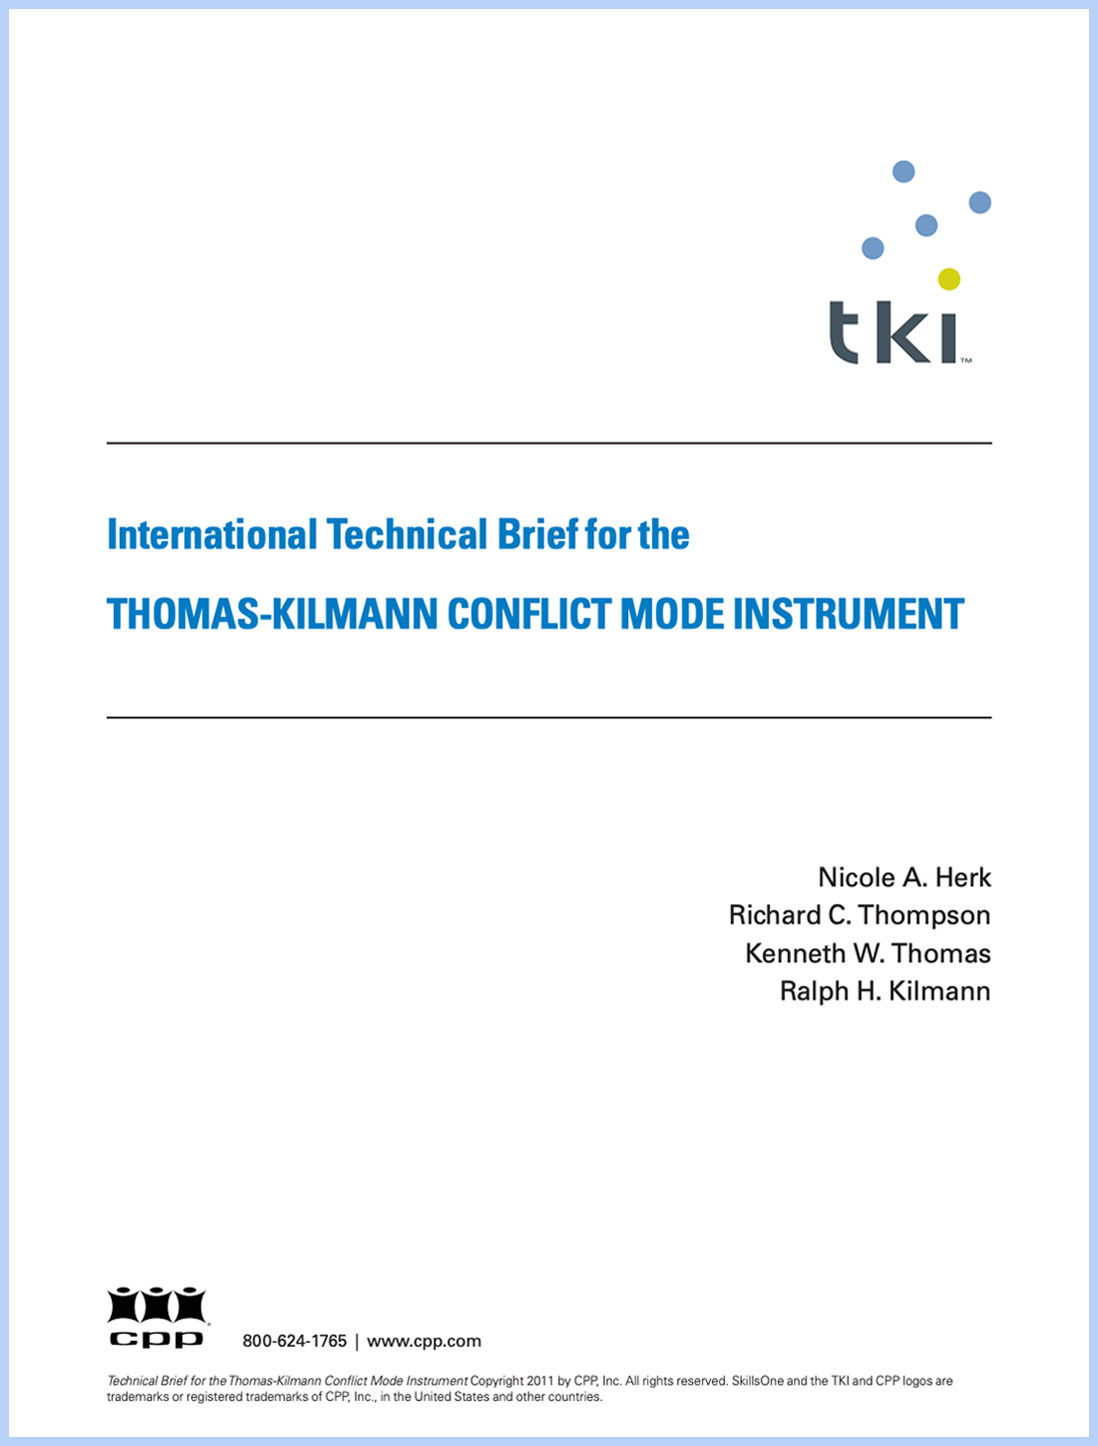 International TKI Norm Study